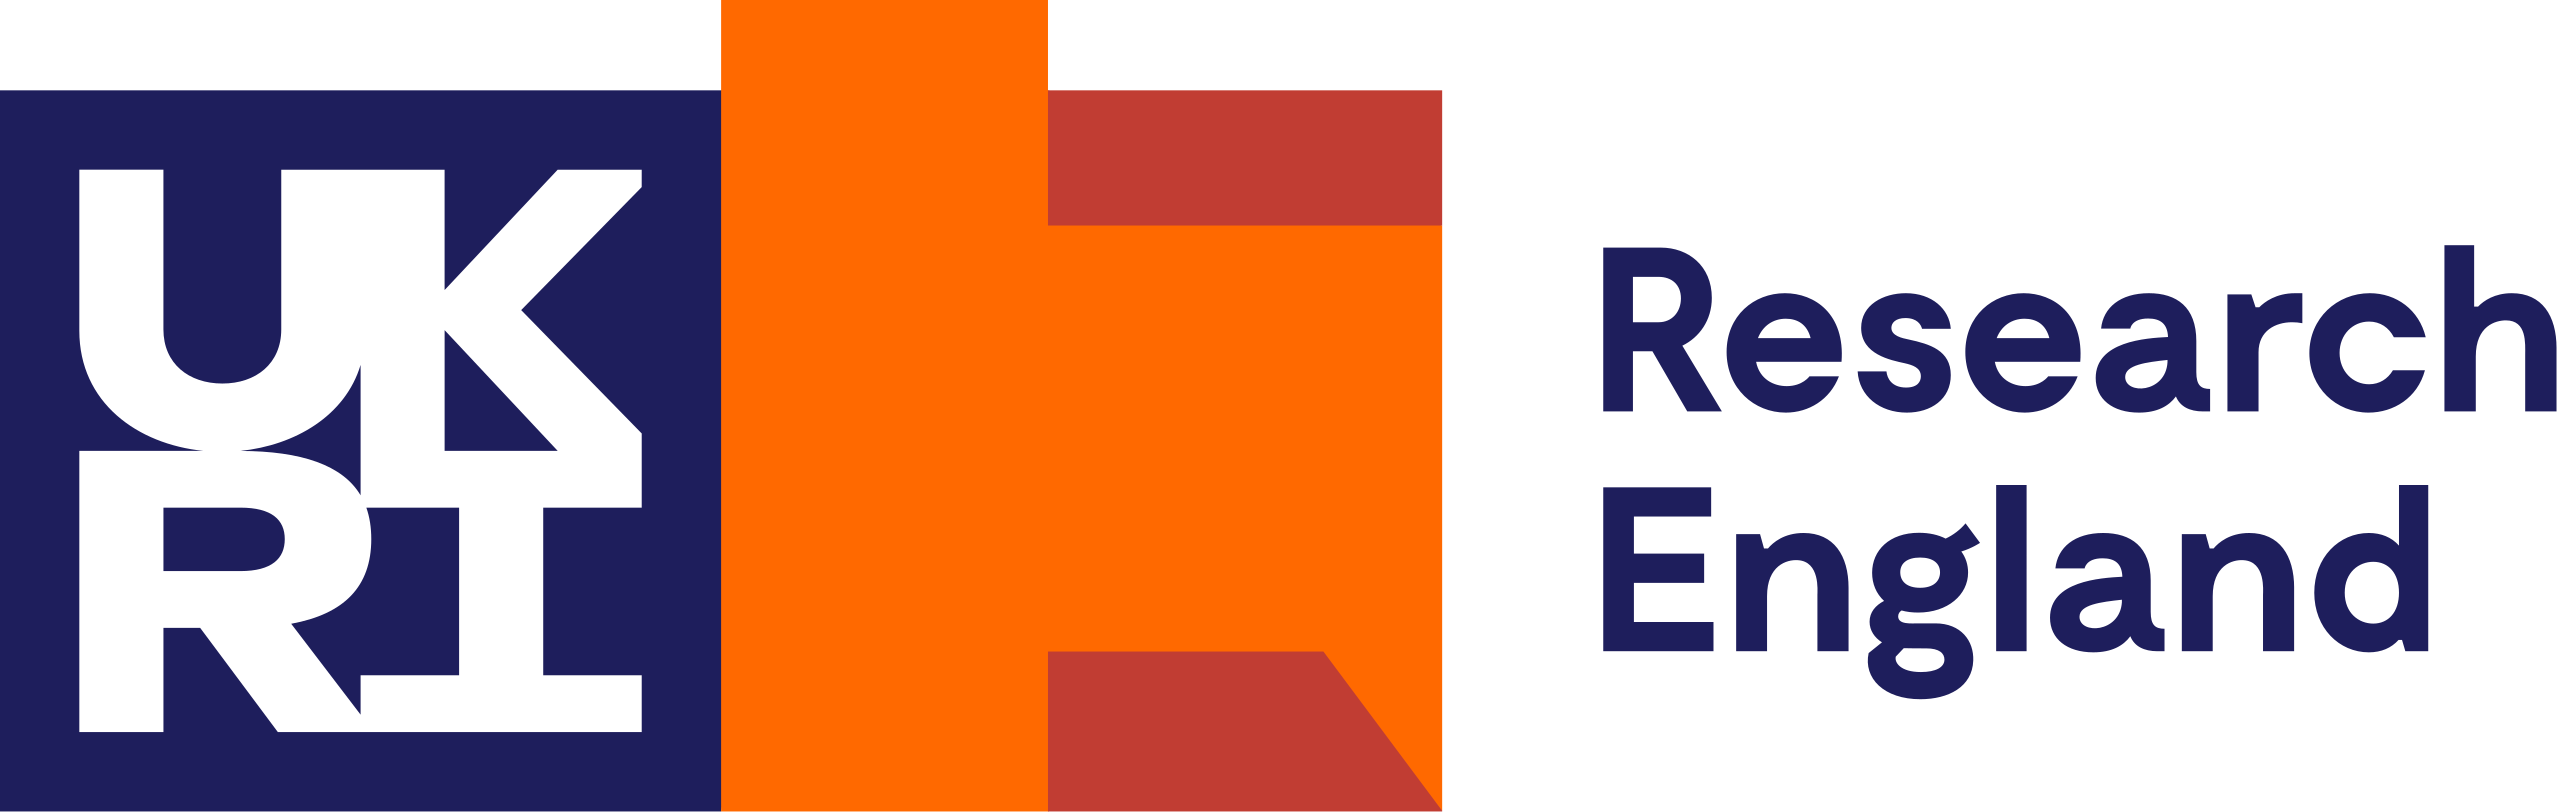 research england logo